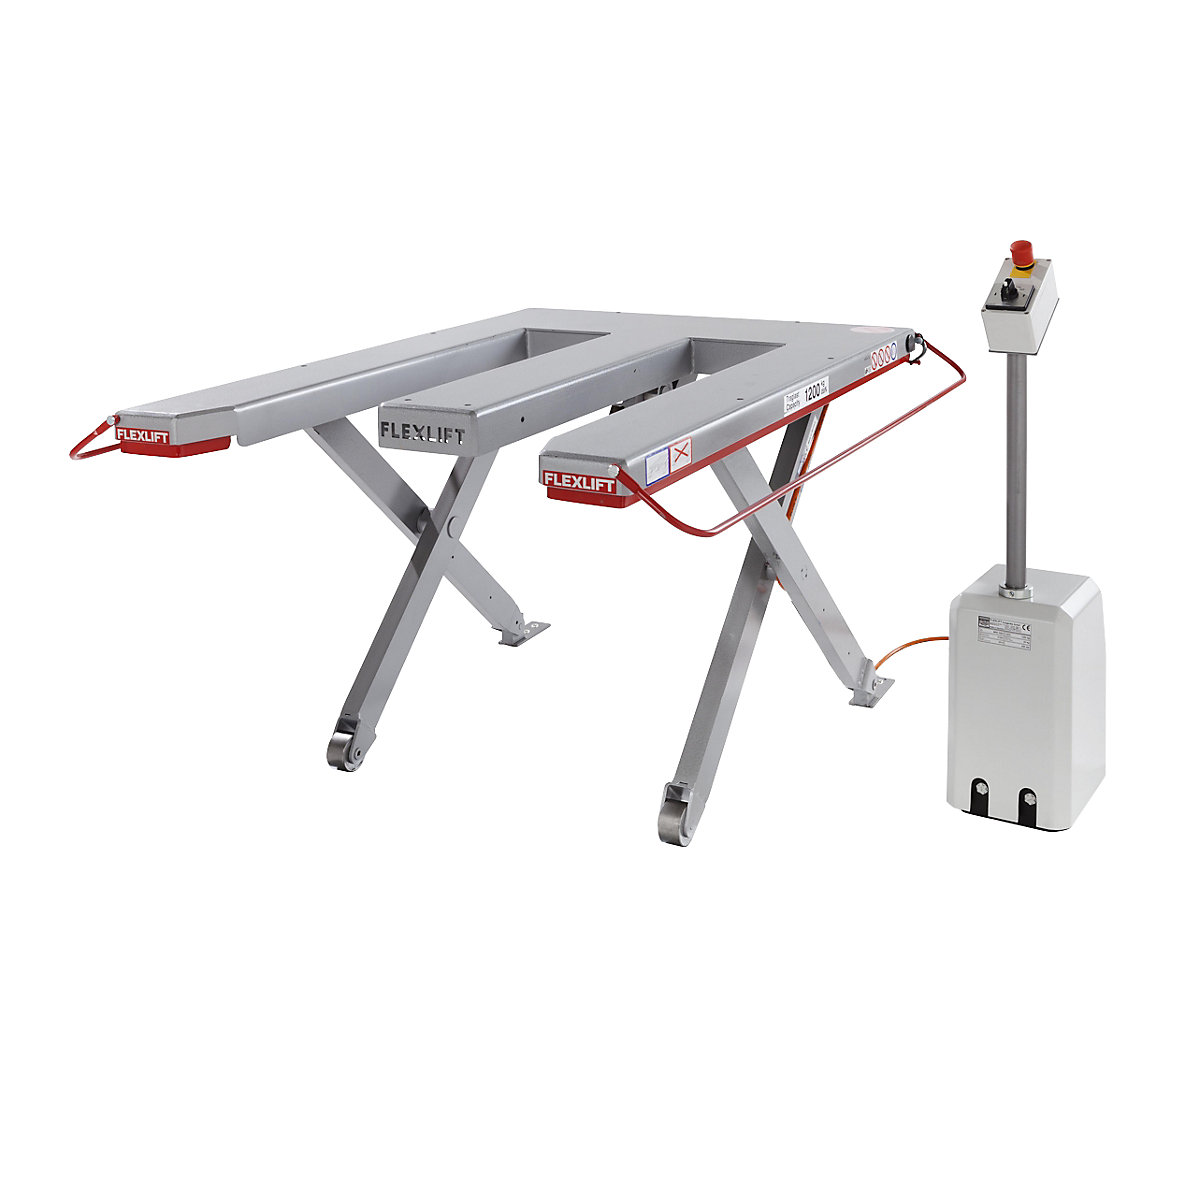 Low profile lift table, E series – Flexlift